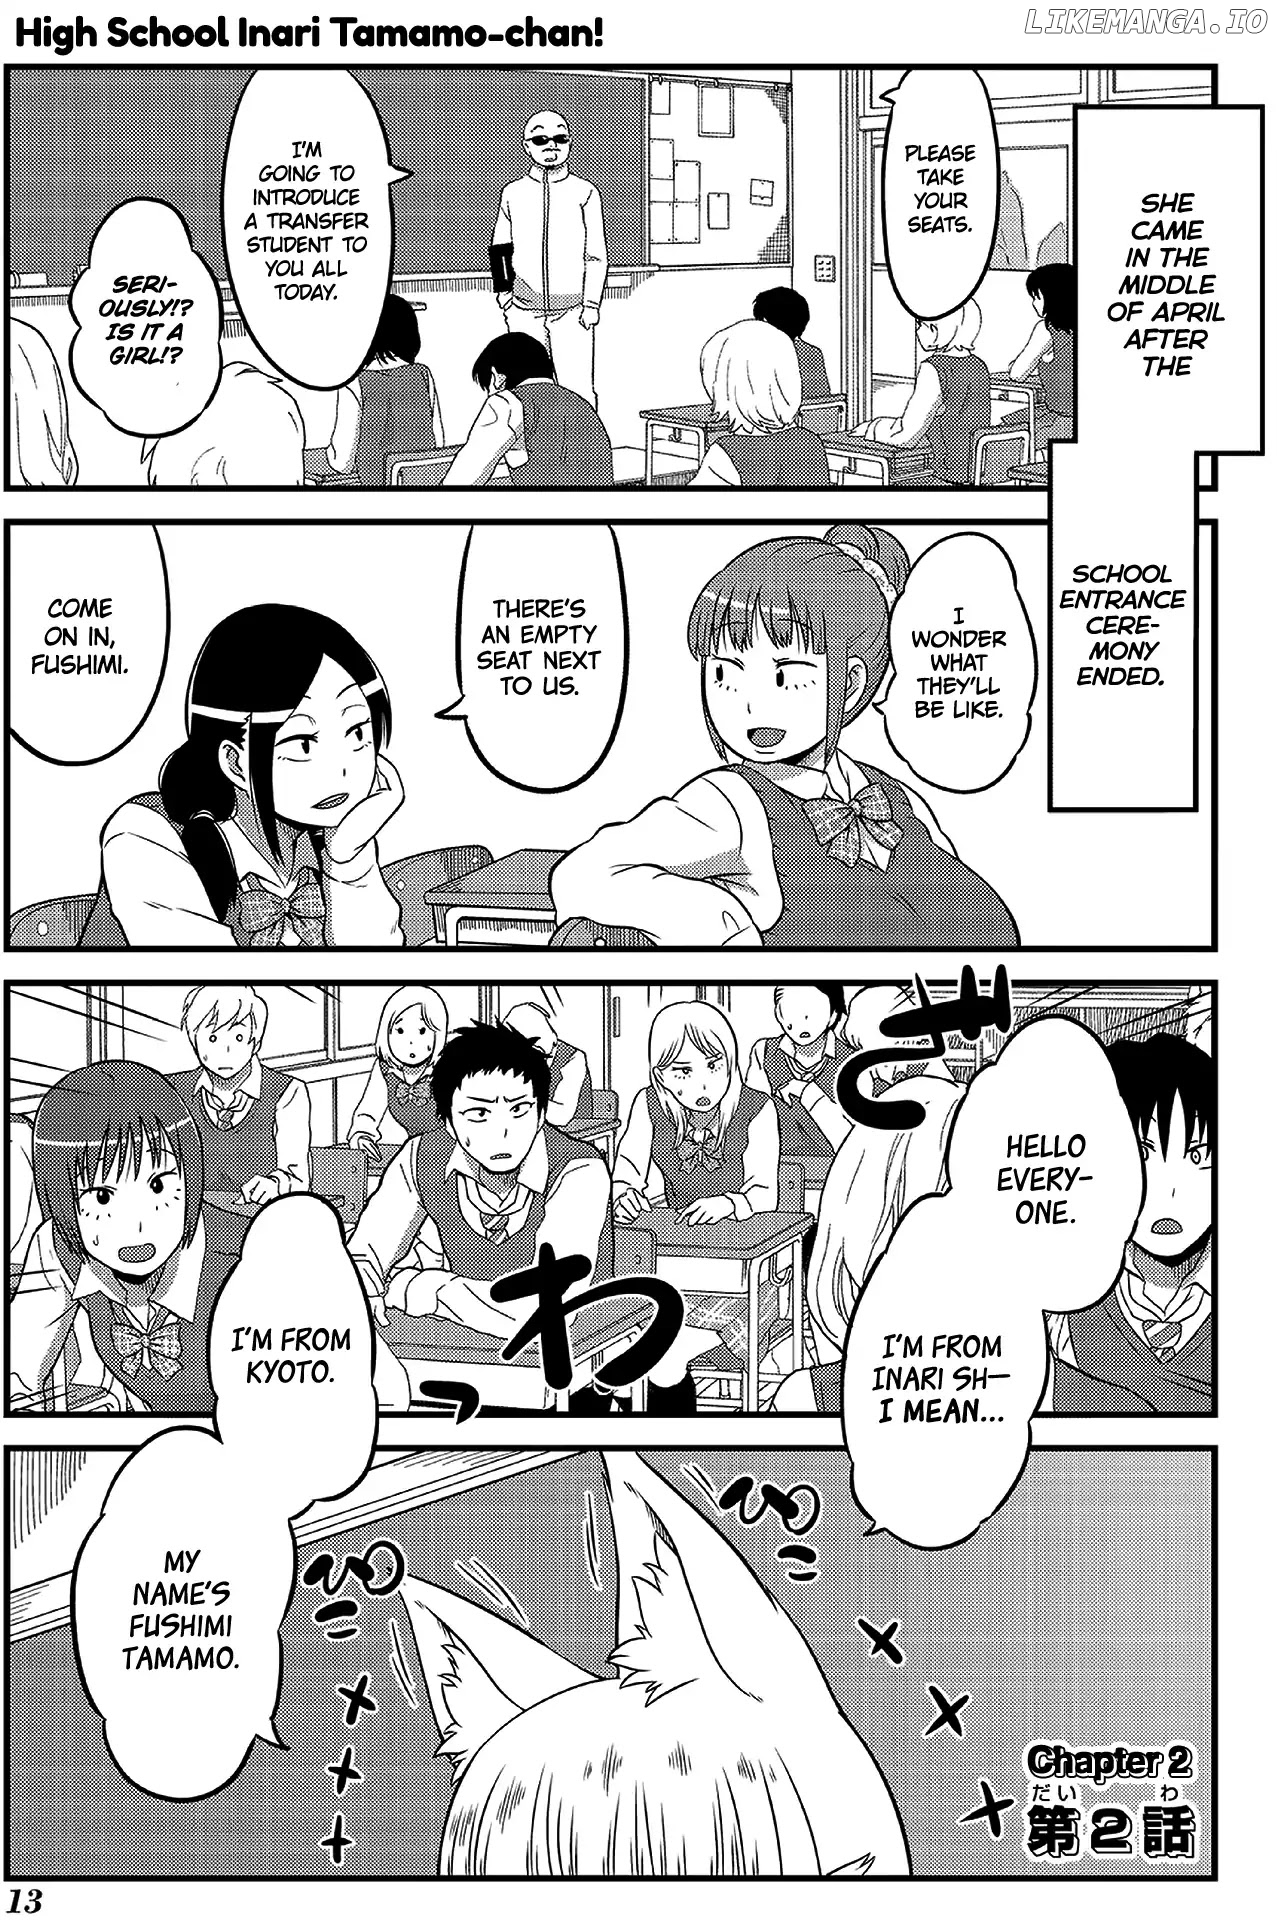 High School Inari Tamamo-Chan! chapter 2 - page 1